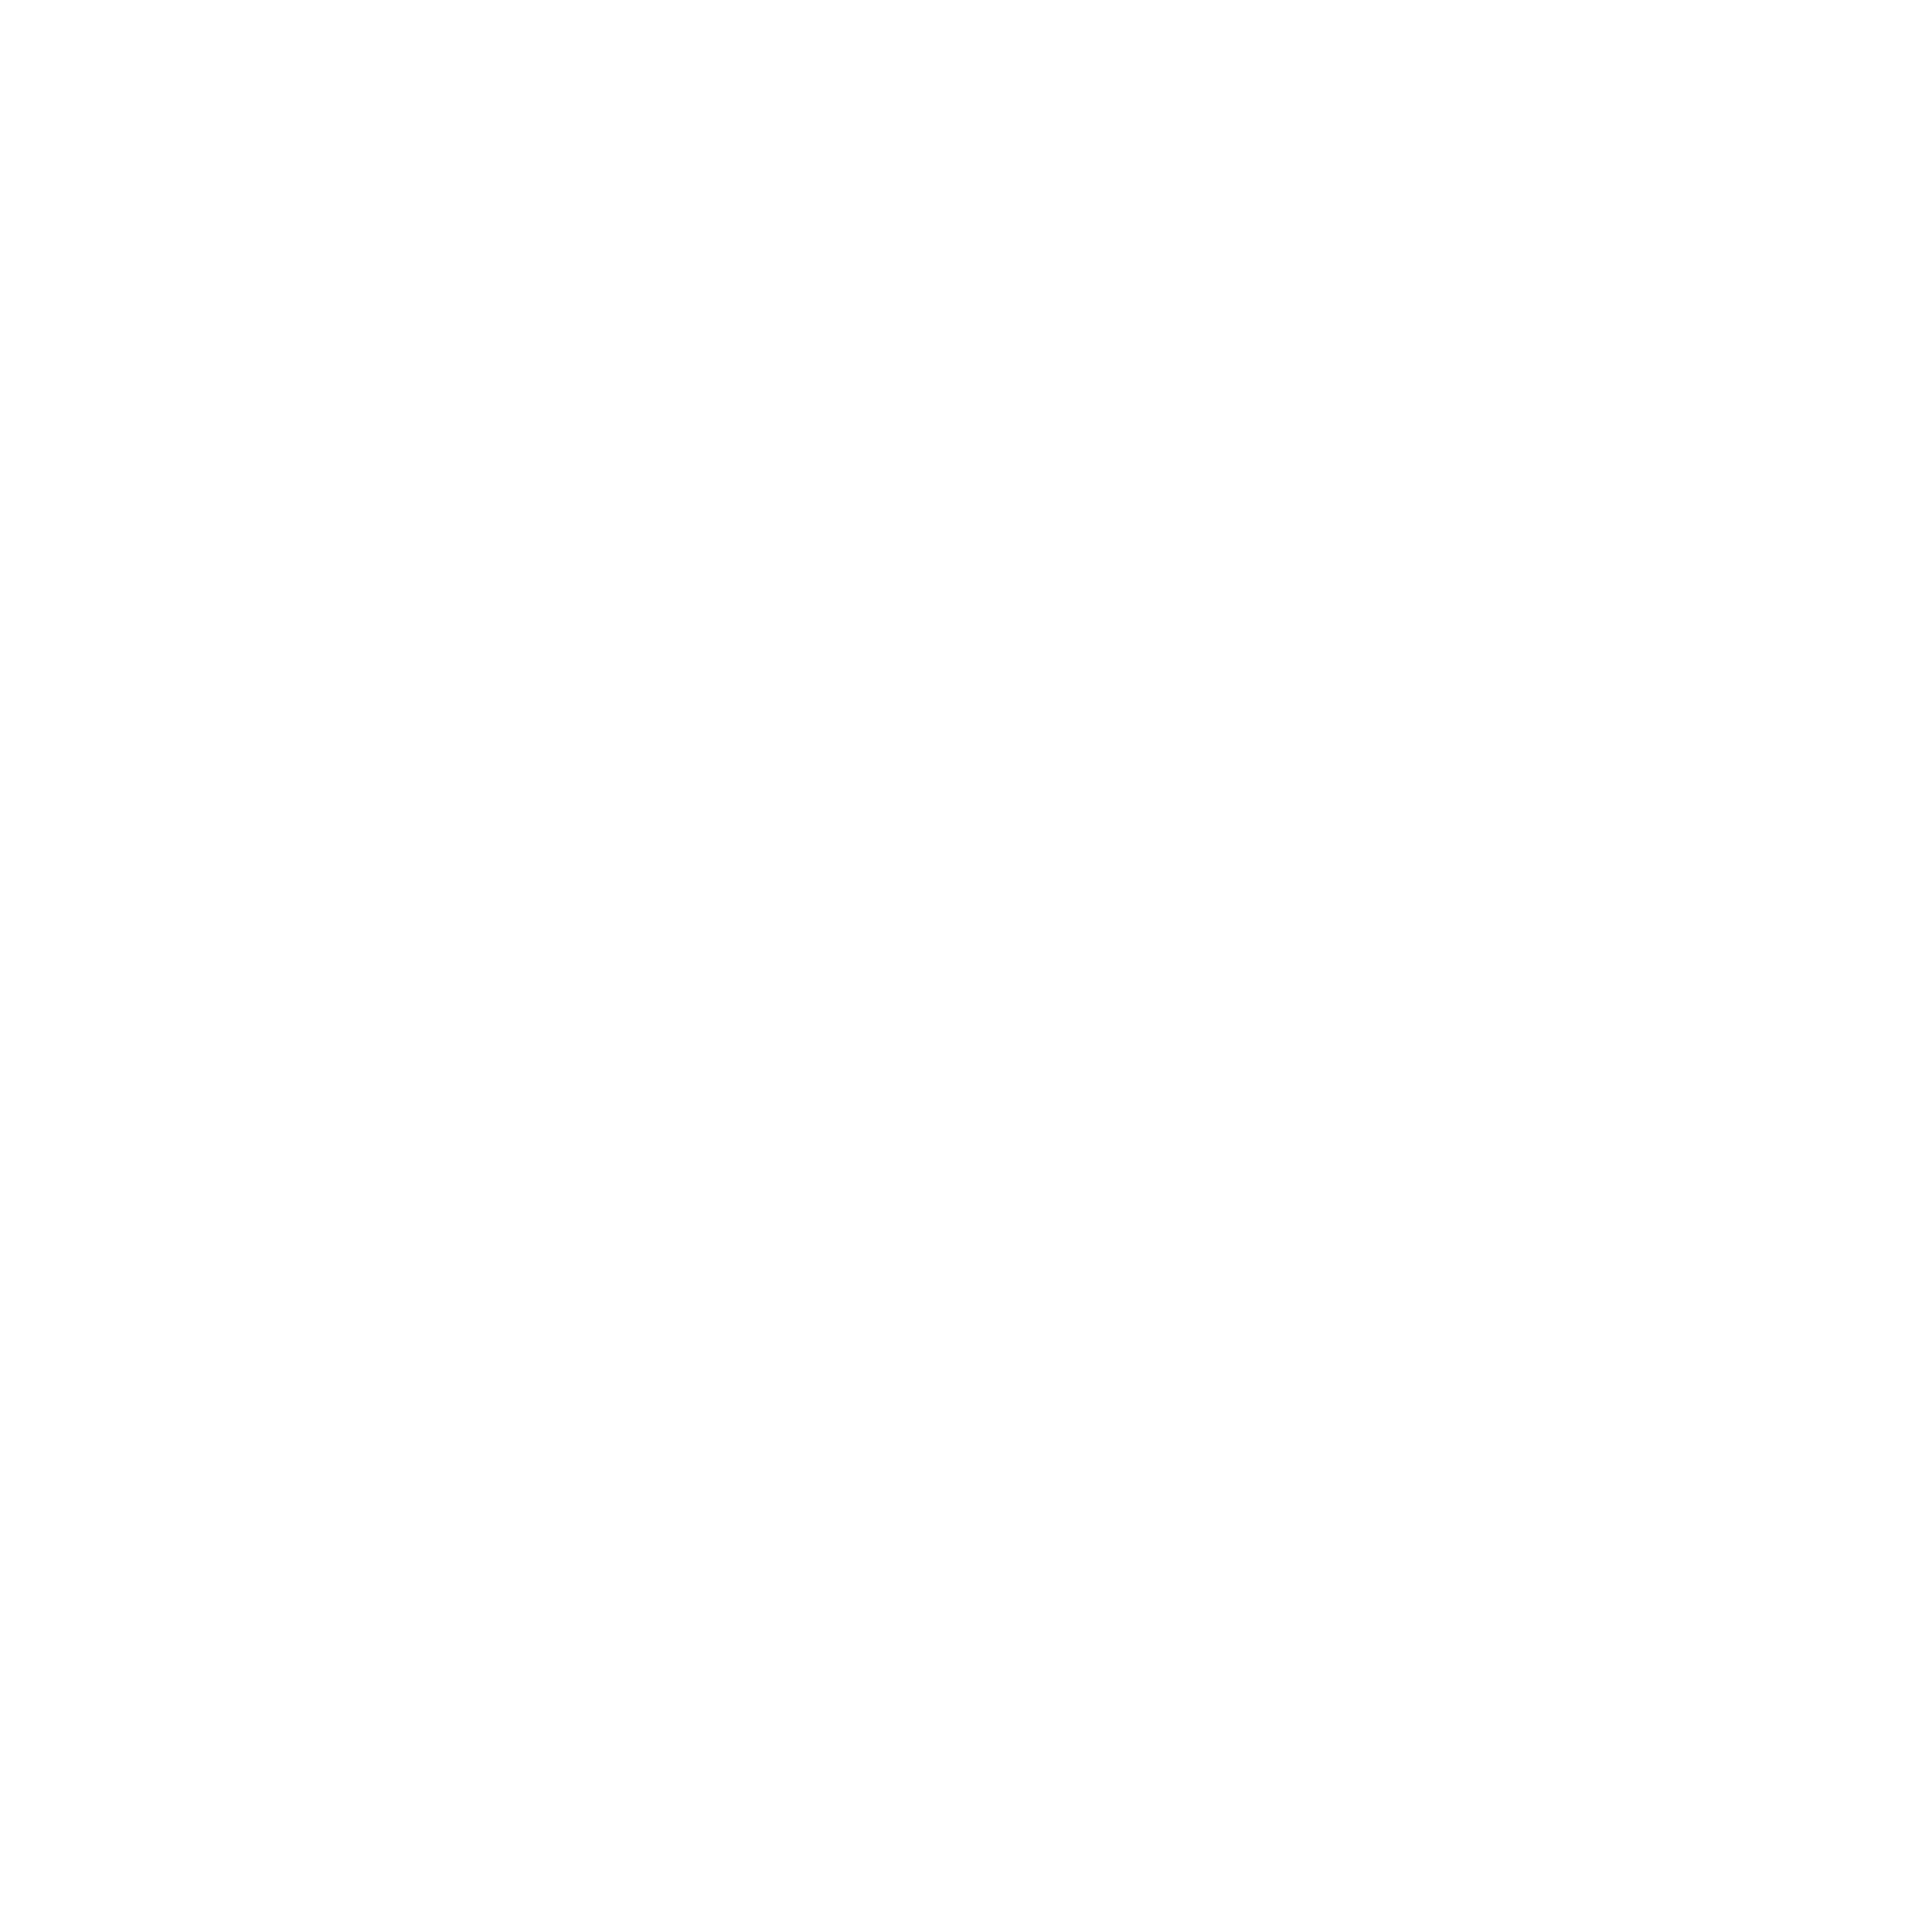 Reserve Ranch